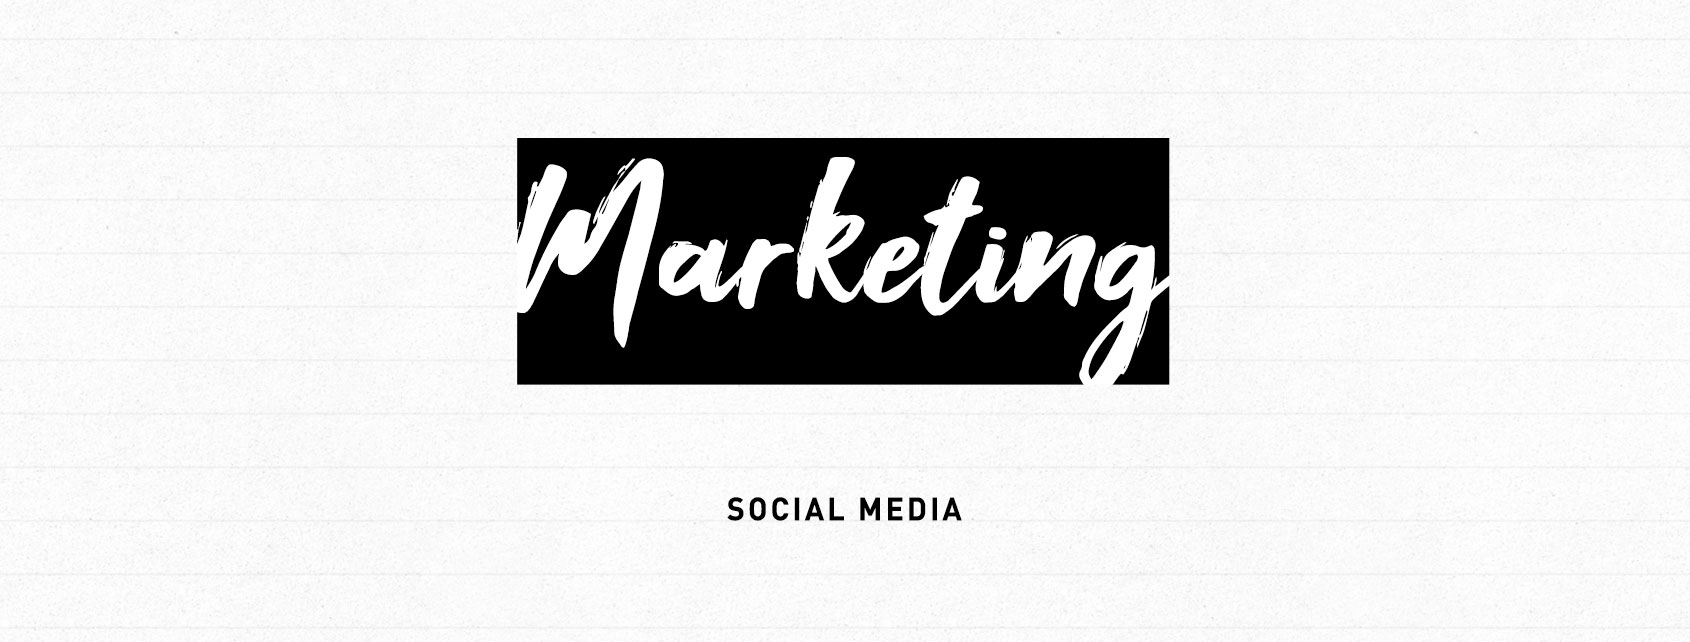 Wie funktioniert Social Media Marketing?